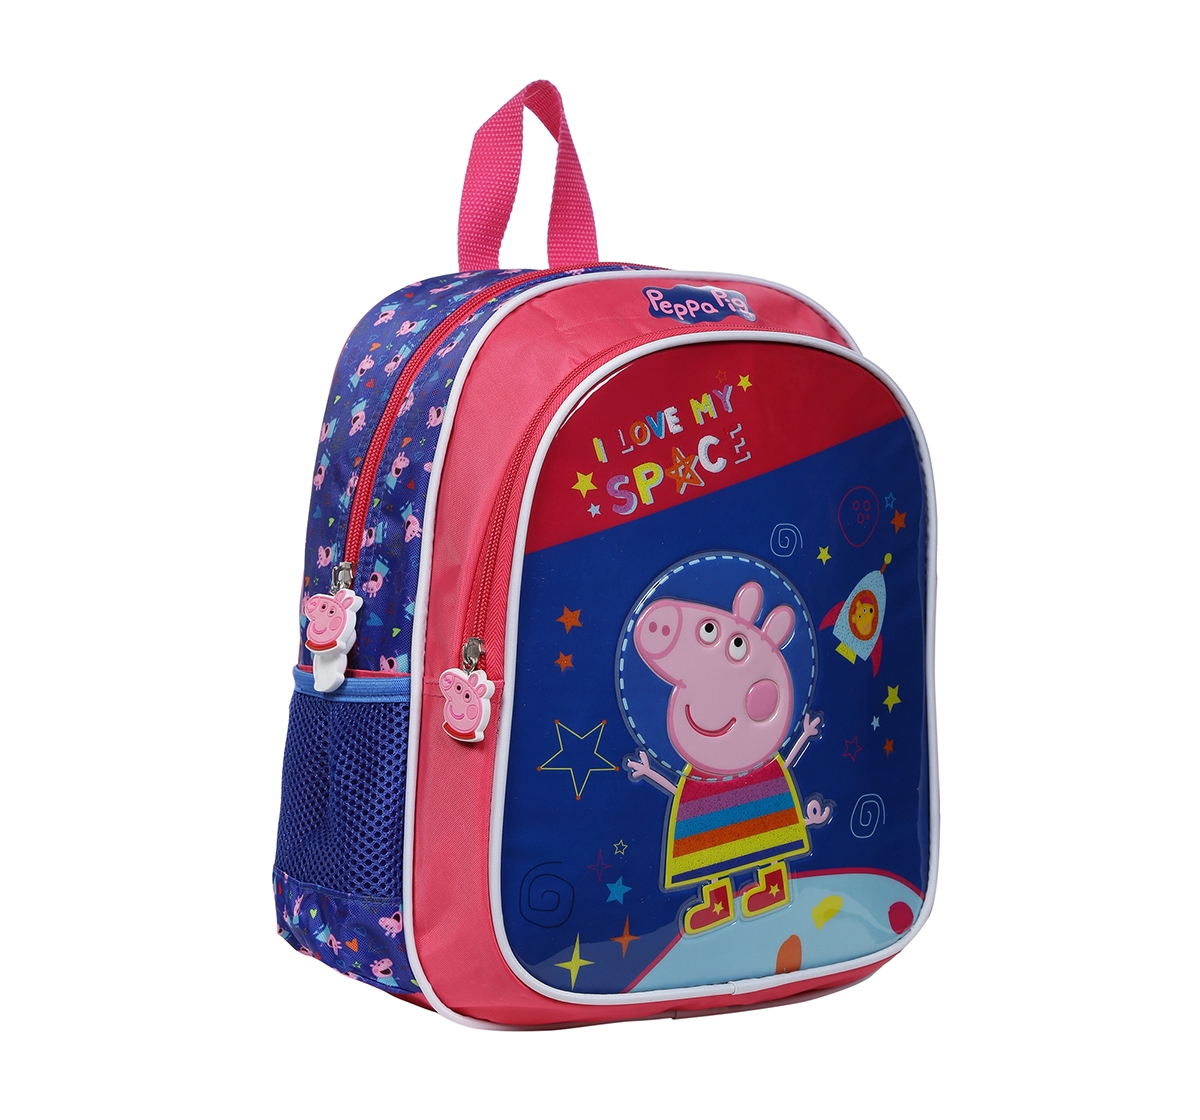 Peppa Pig |  Peppa Pig I Love My Space 12 Backpack Bags for Kids age 3Y+  1